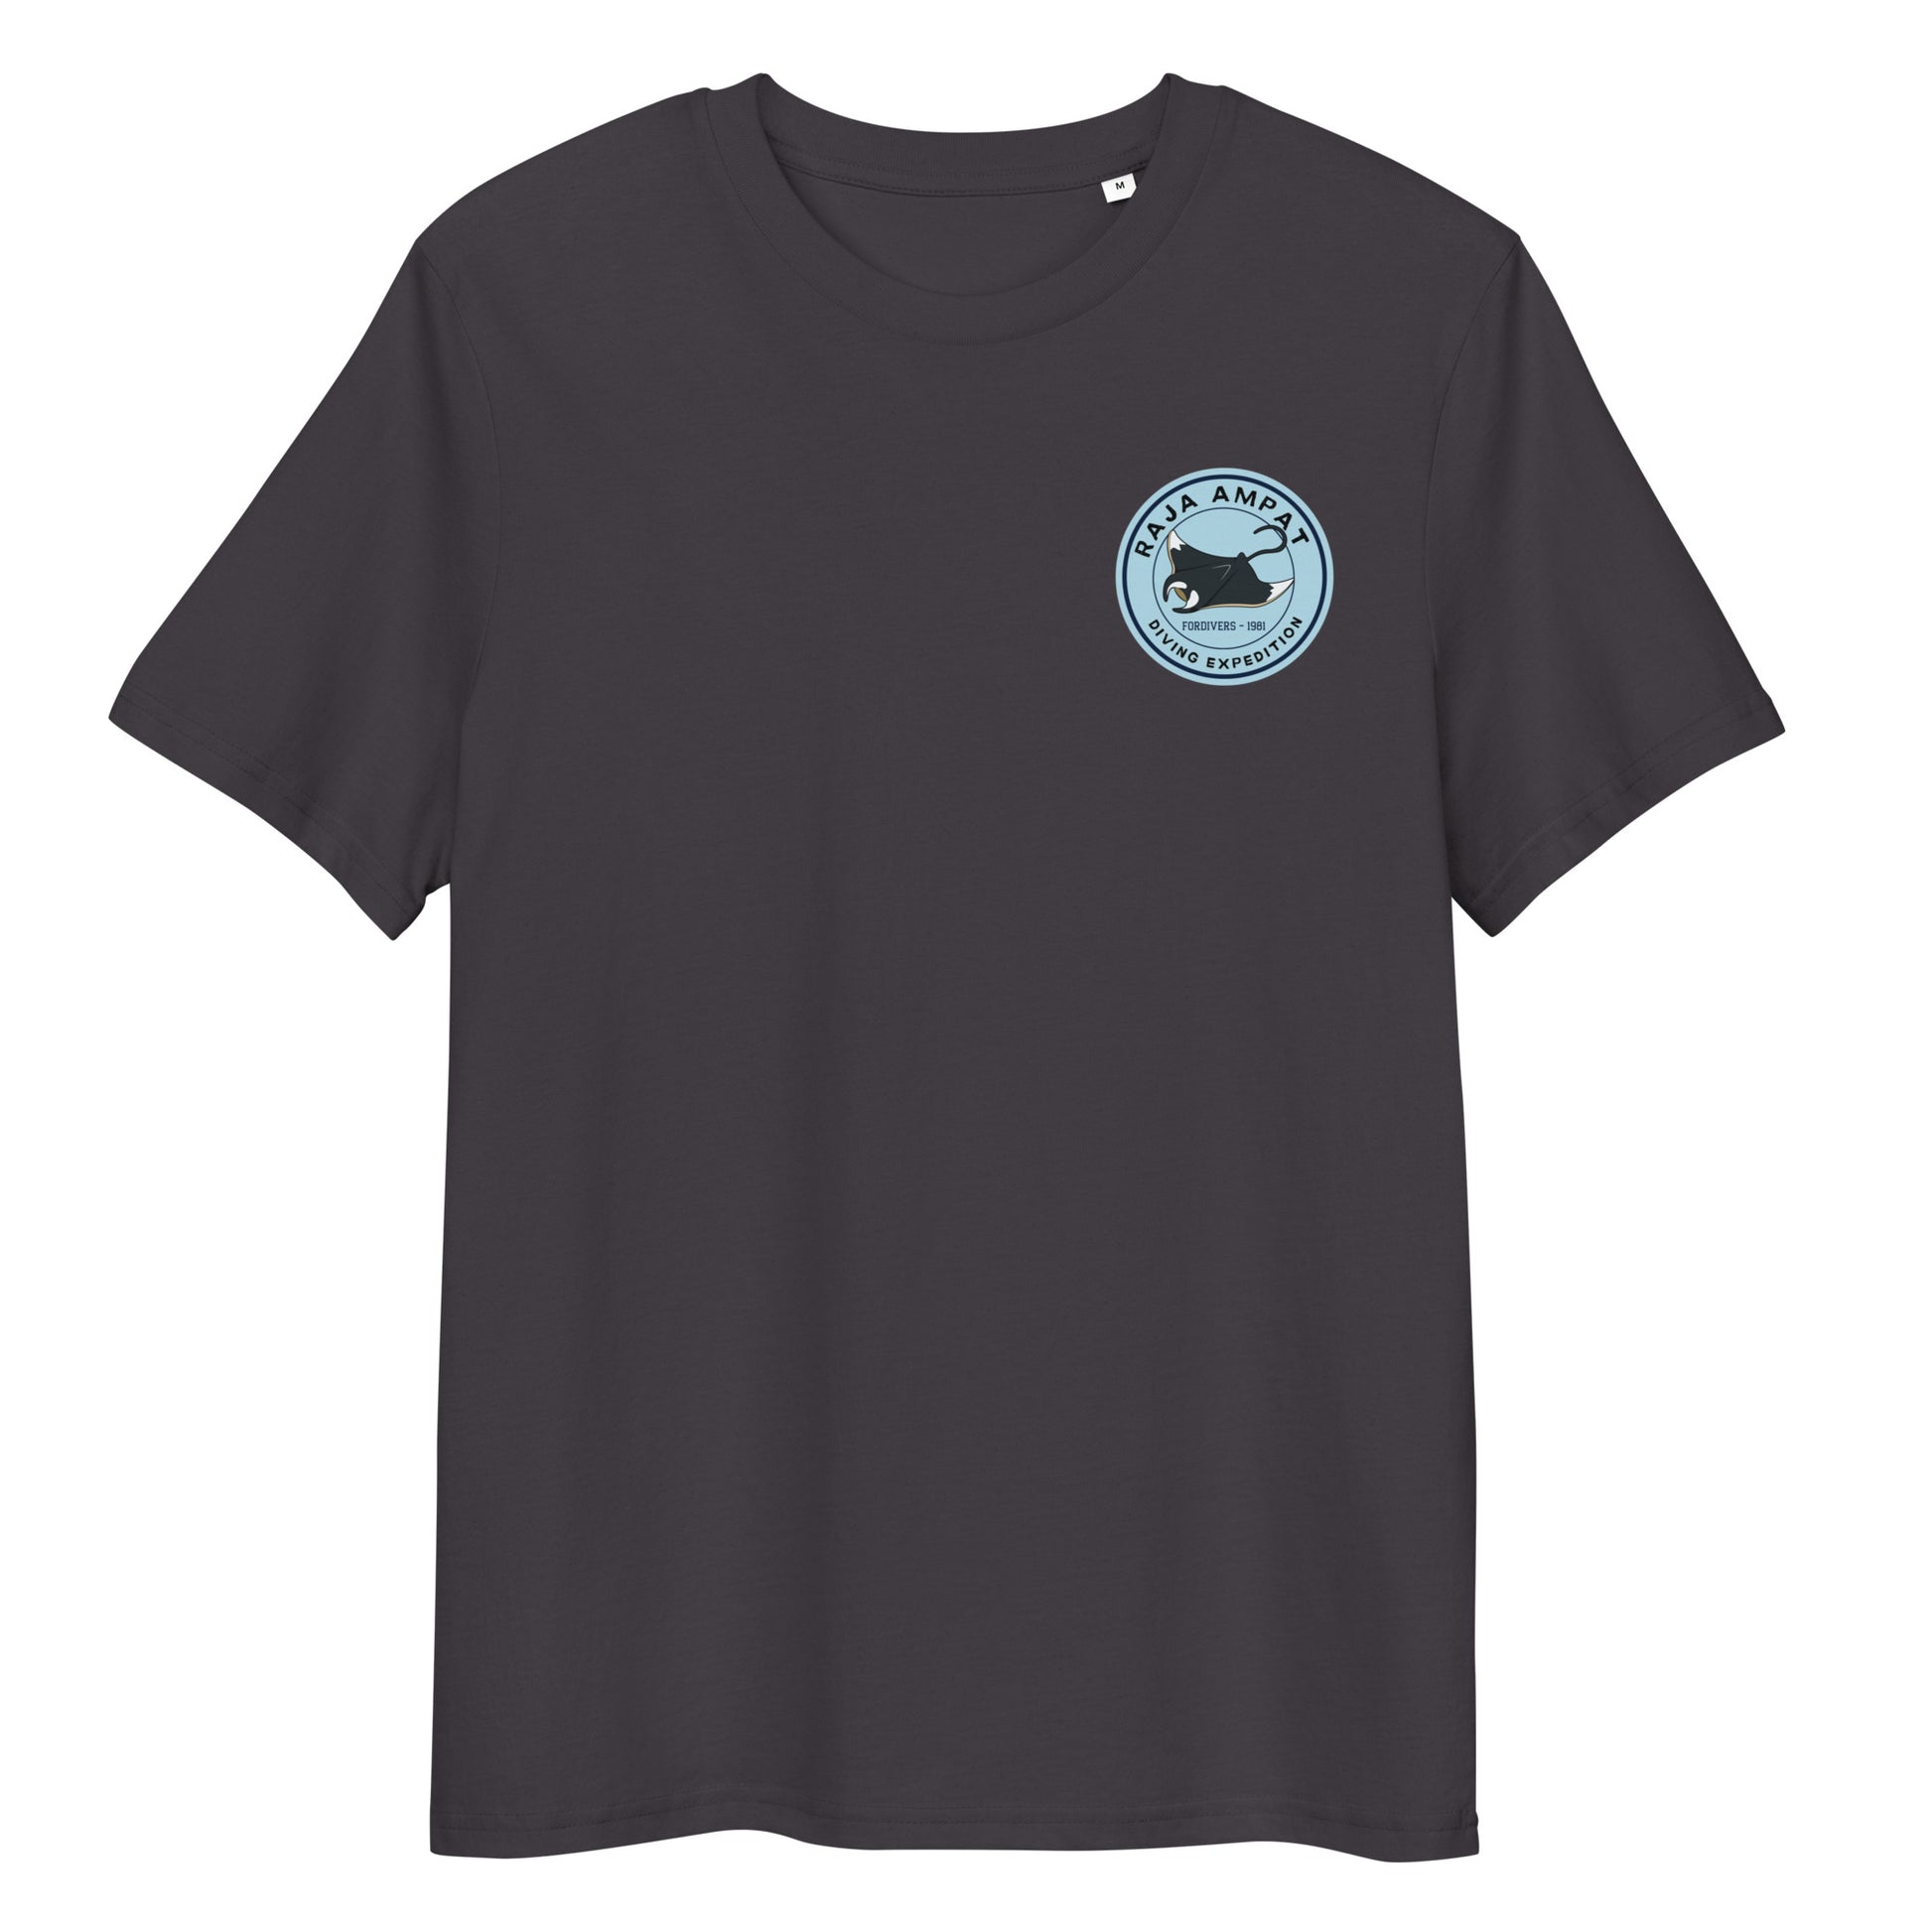 raja ampat diving expedition t-shirt